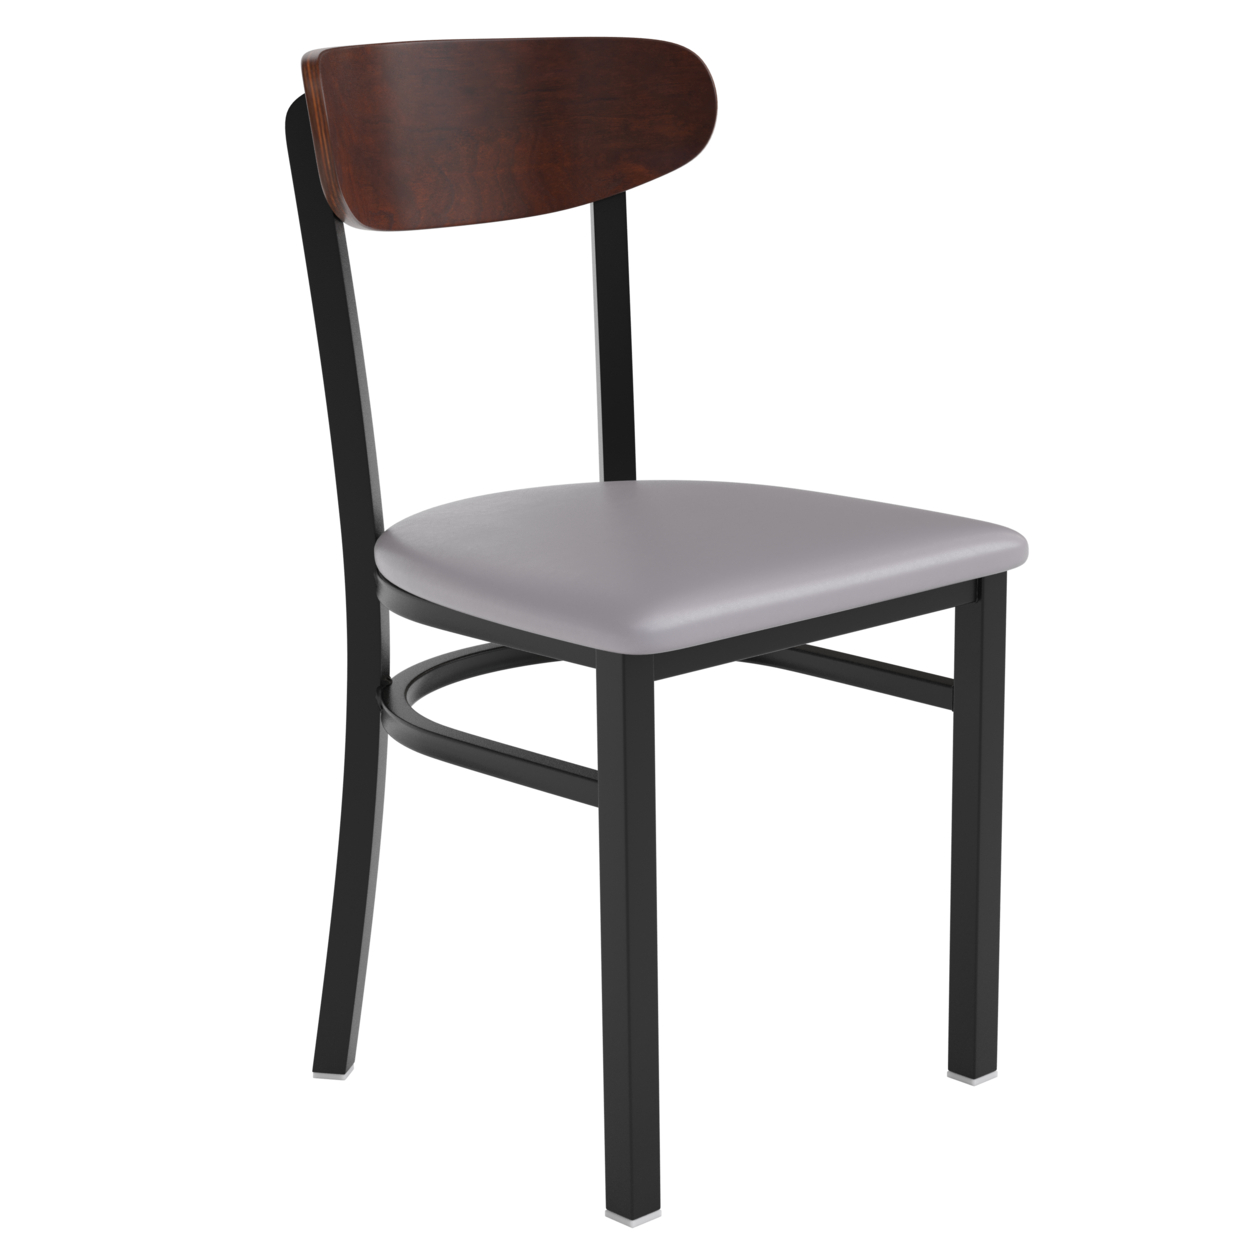 Dining Chair With Walnut Wood Boomerang Back, Black Steel, Gray Vinyl Seat